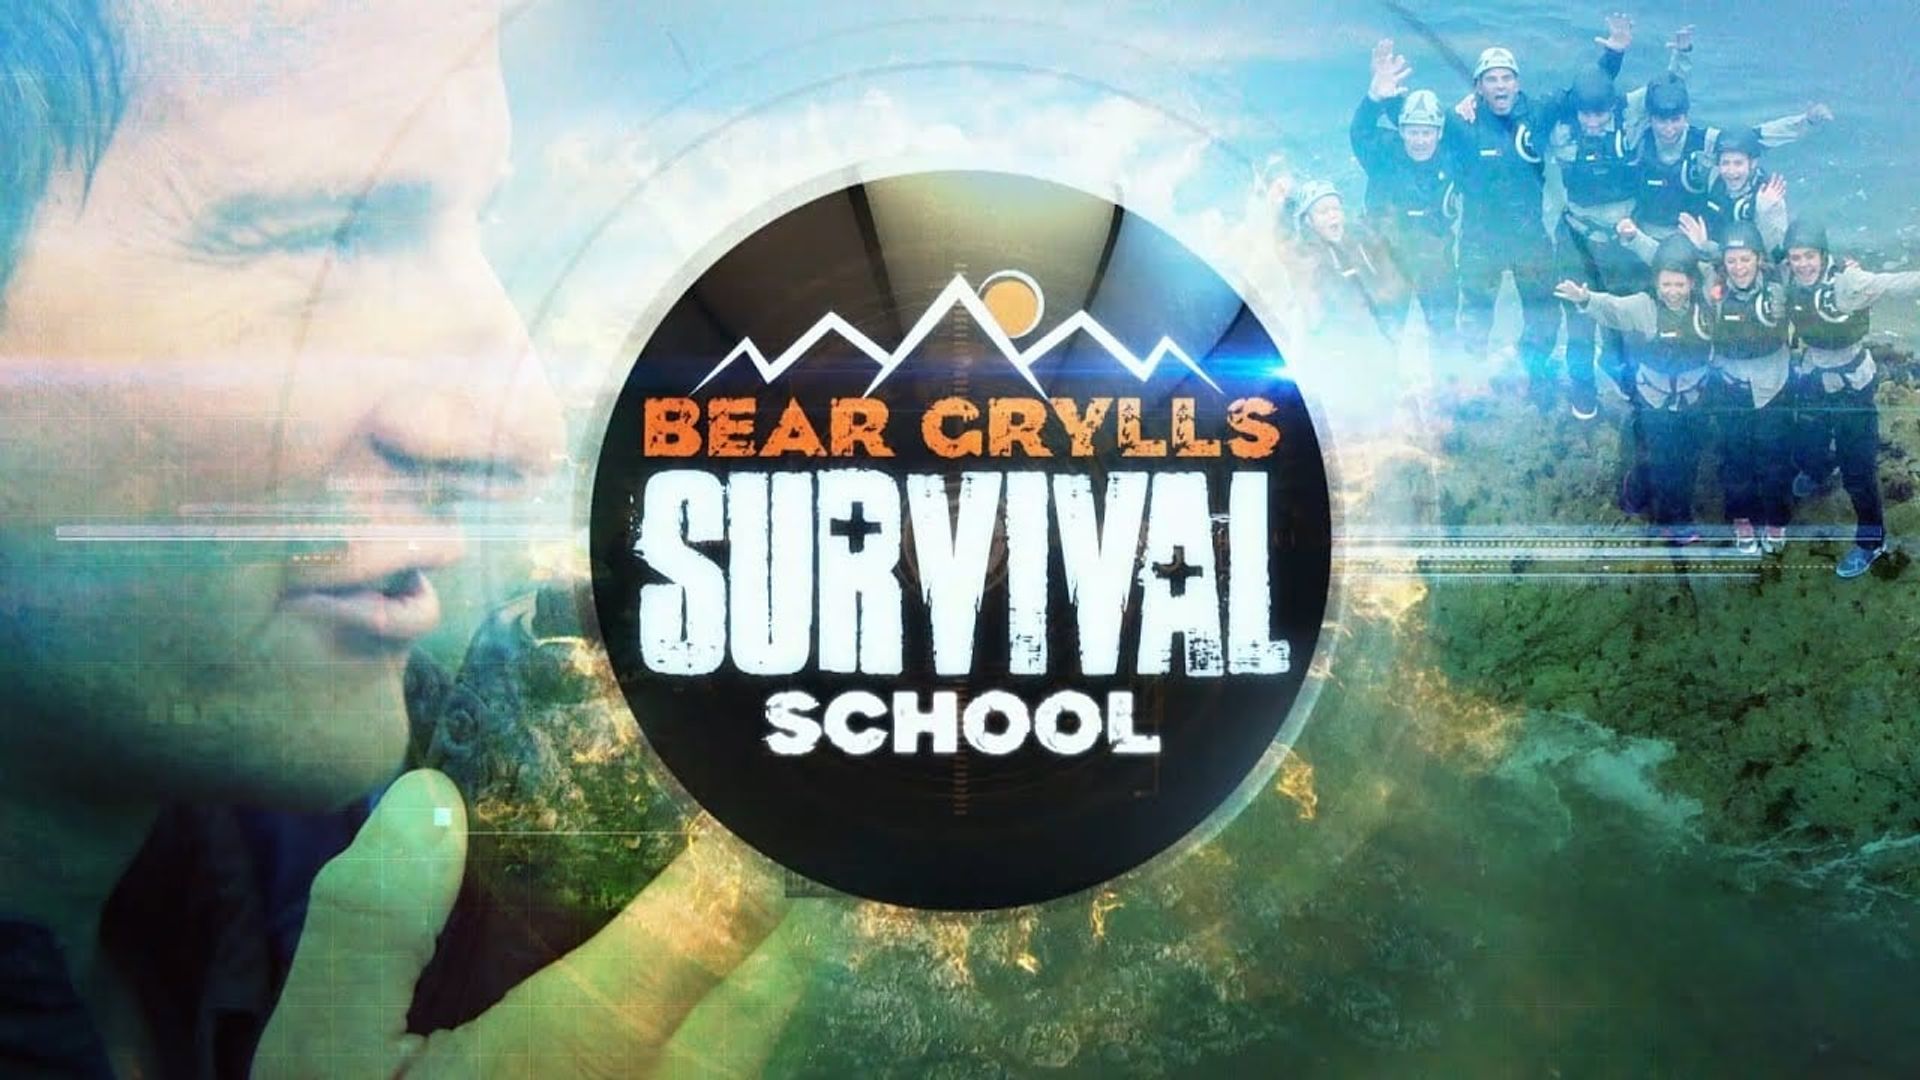 Bear Grylls: Survival School (TV Series 2016– ) - IMDb